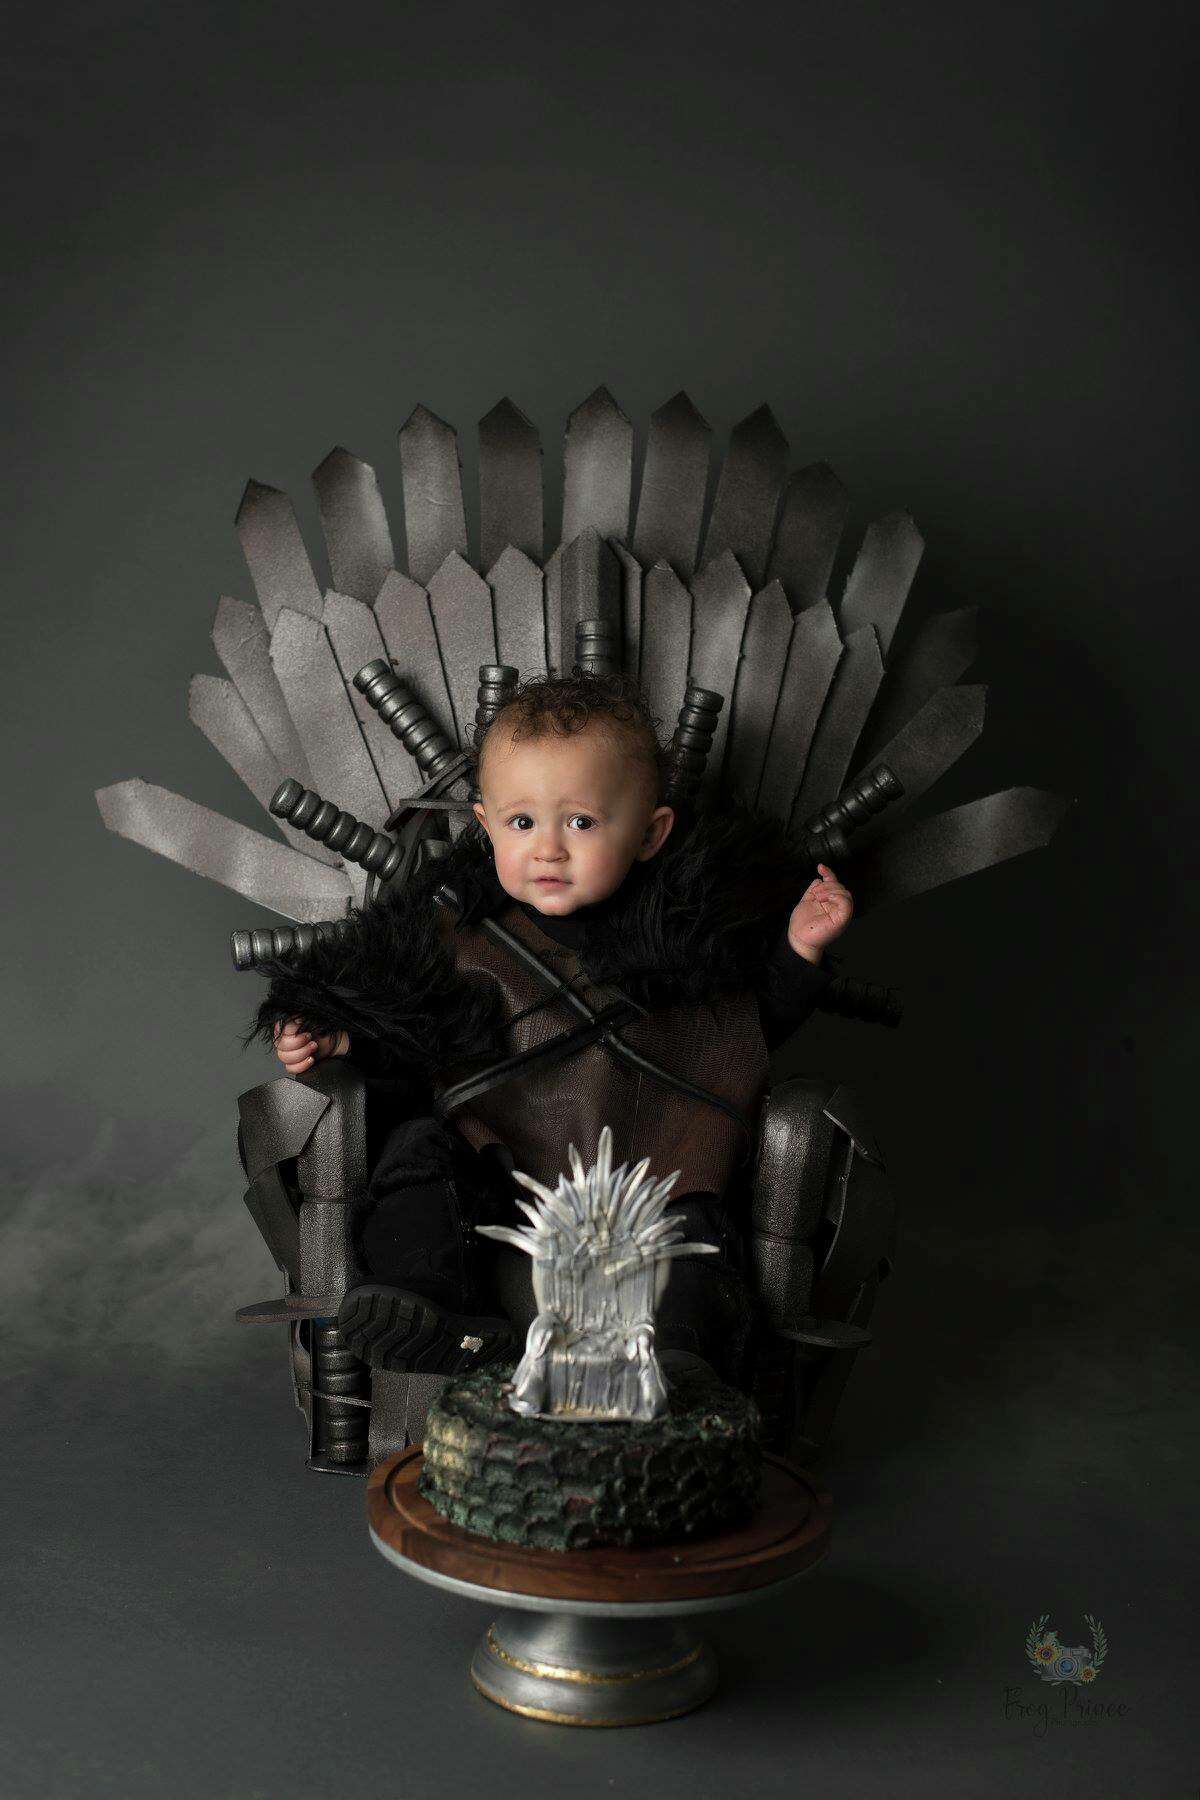 Hosea Victor turned one on Feb. 6, but he's already ready to rule the Seven Kingdoms like Jon Snow.